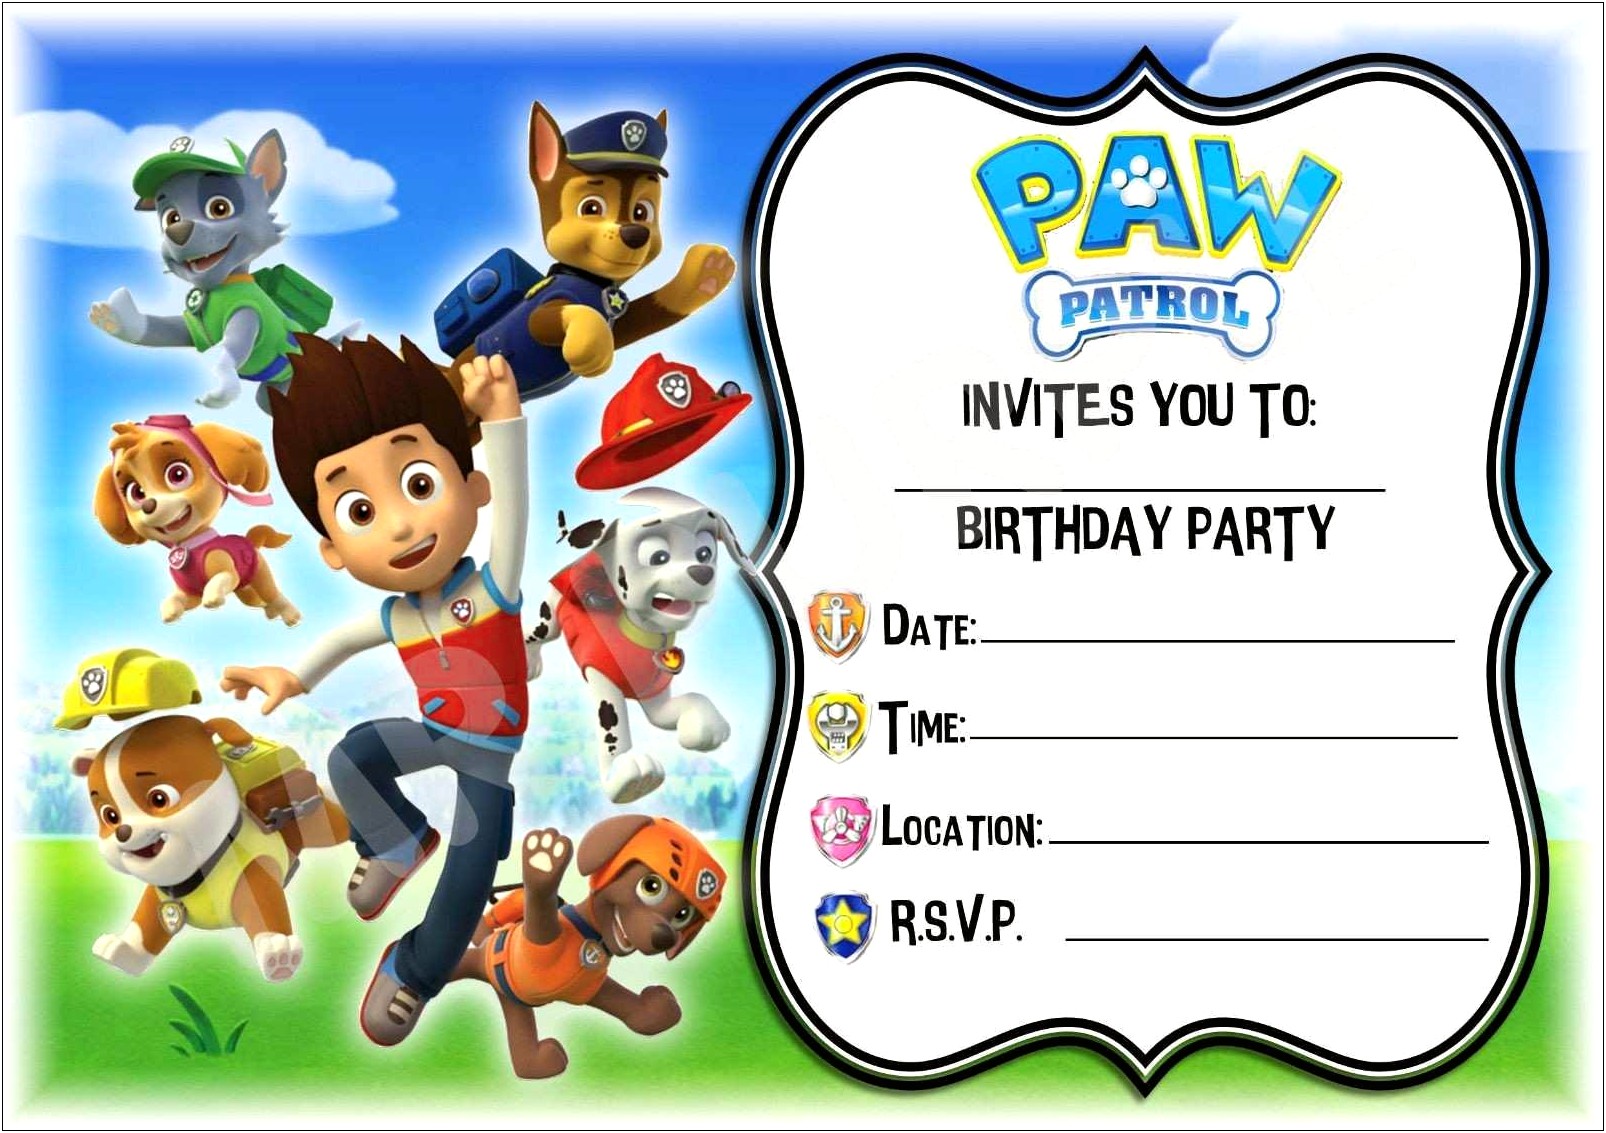 Paw Patrol Birthday Party Invitation Template Free